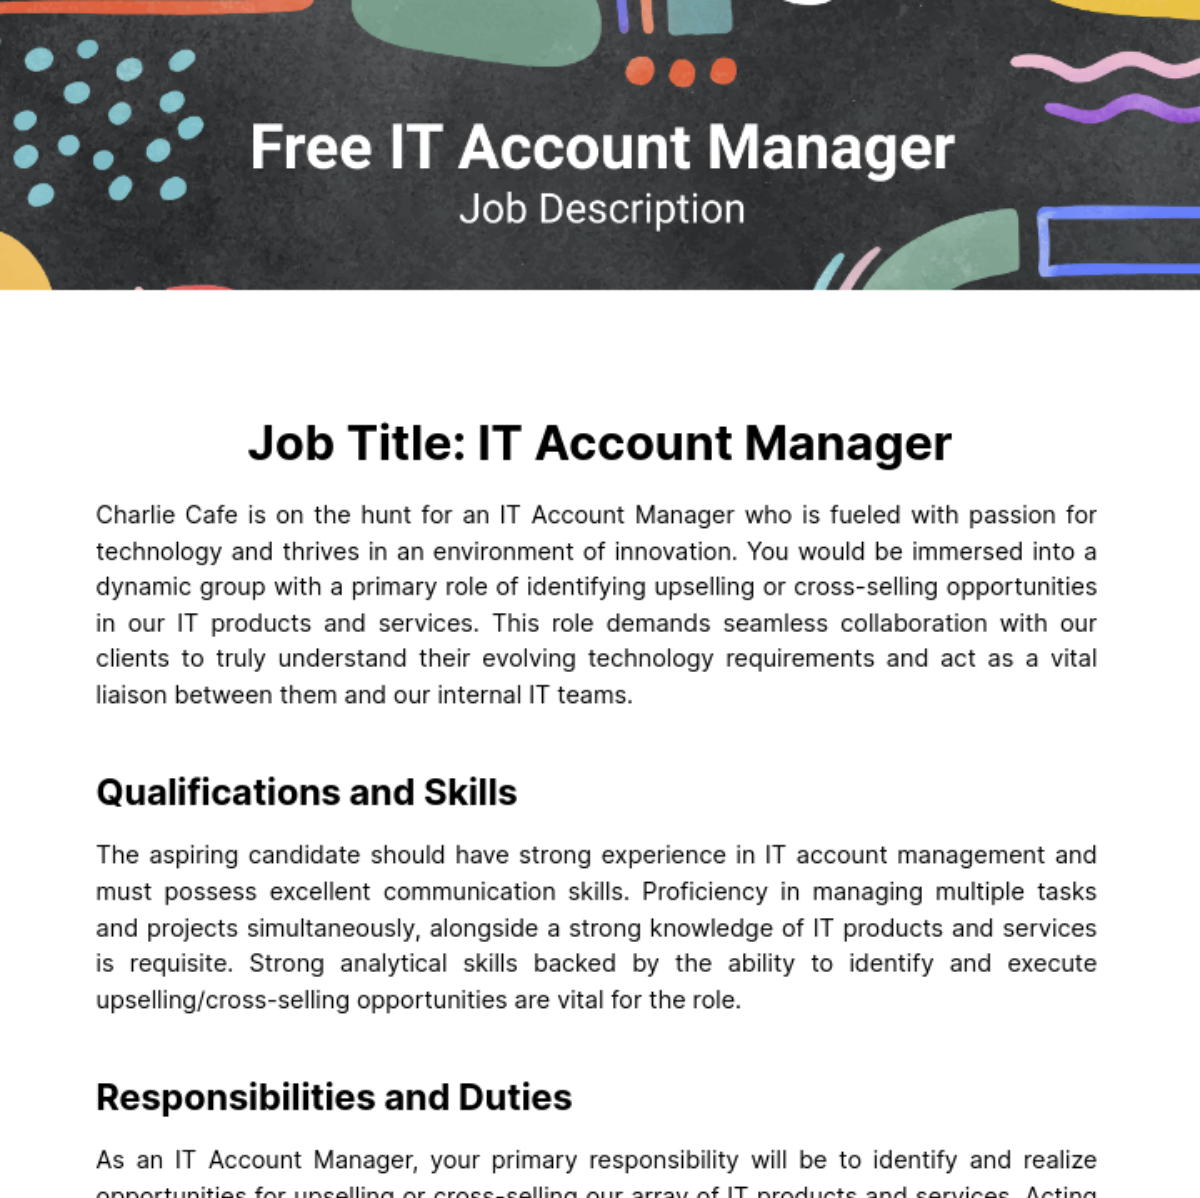 Free IT Account Manager Job Description Template